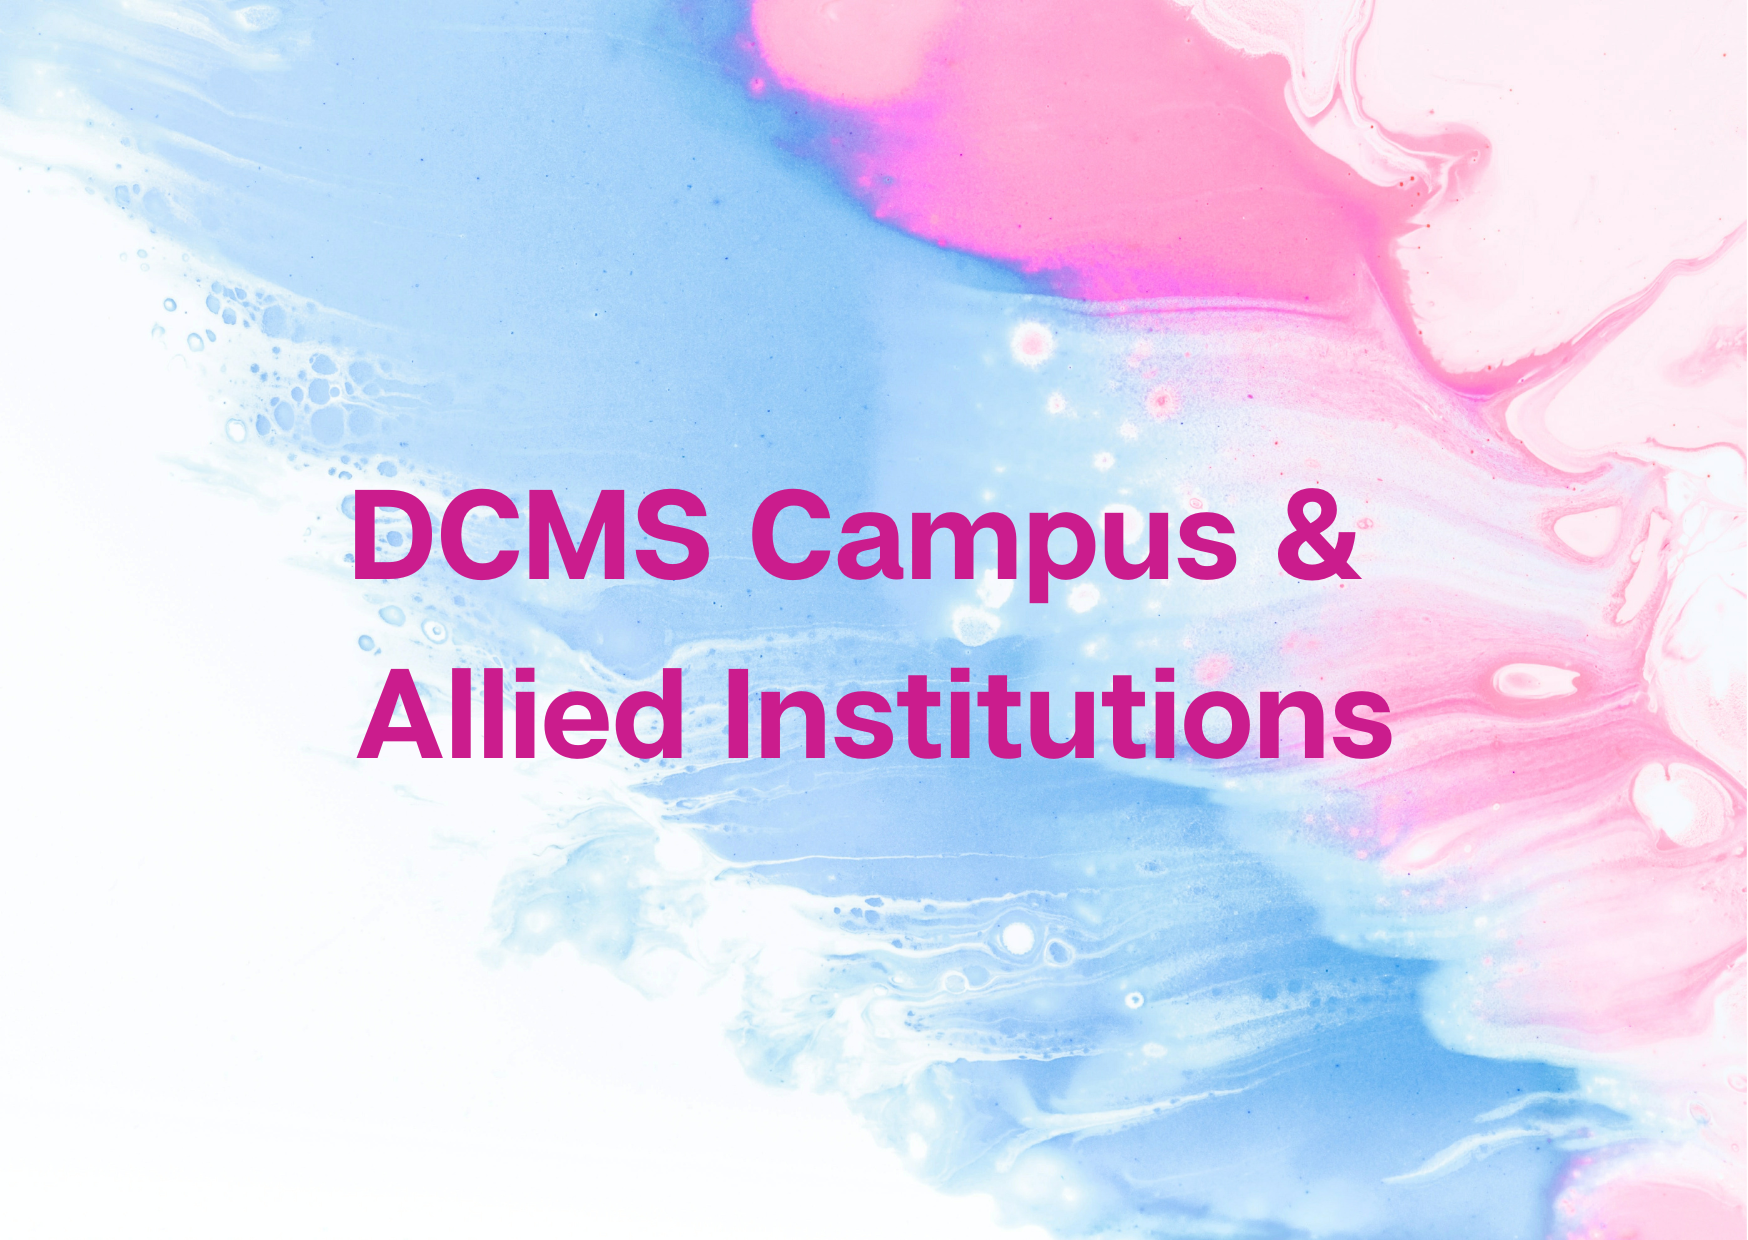  DCMS Campus & Allied Institutions,   